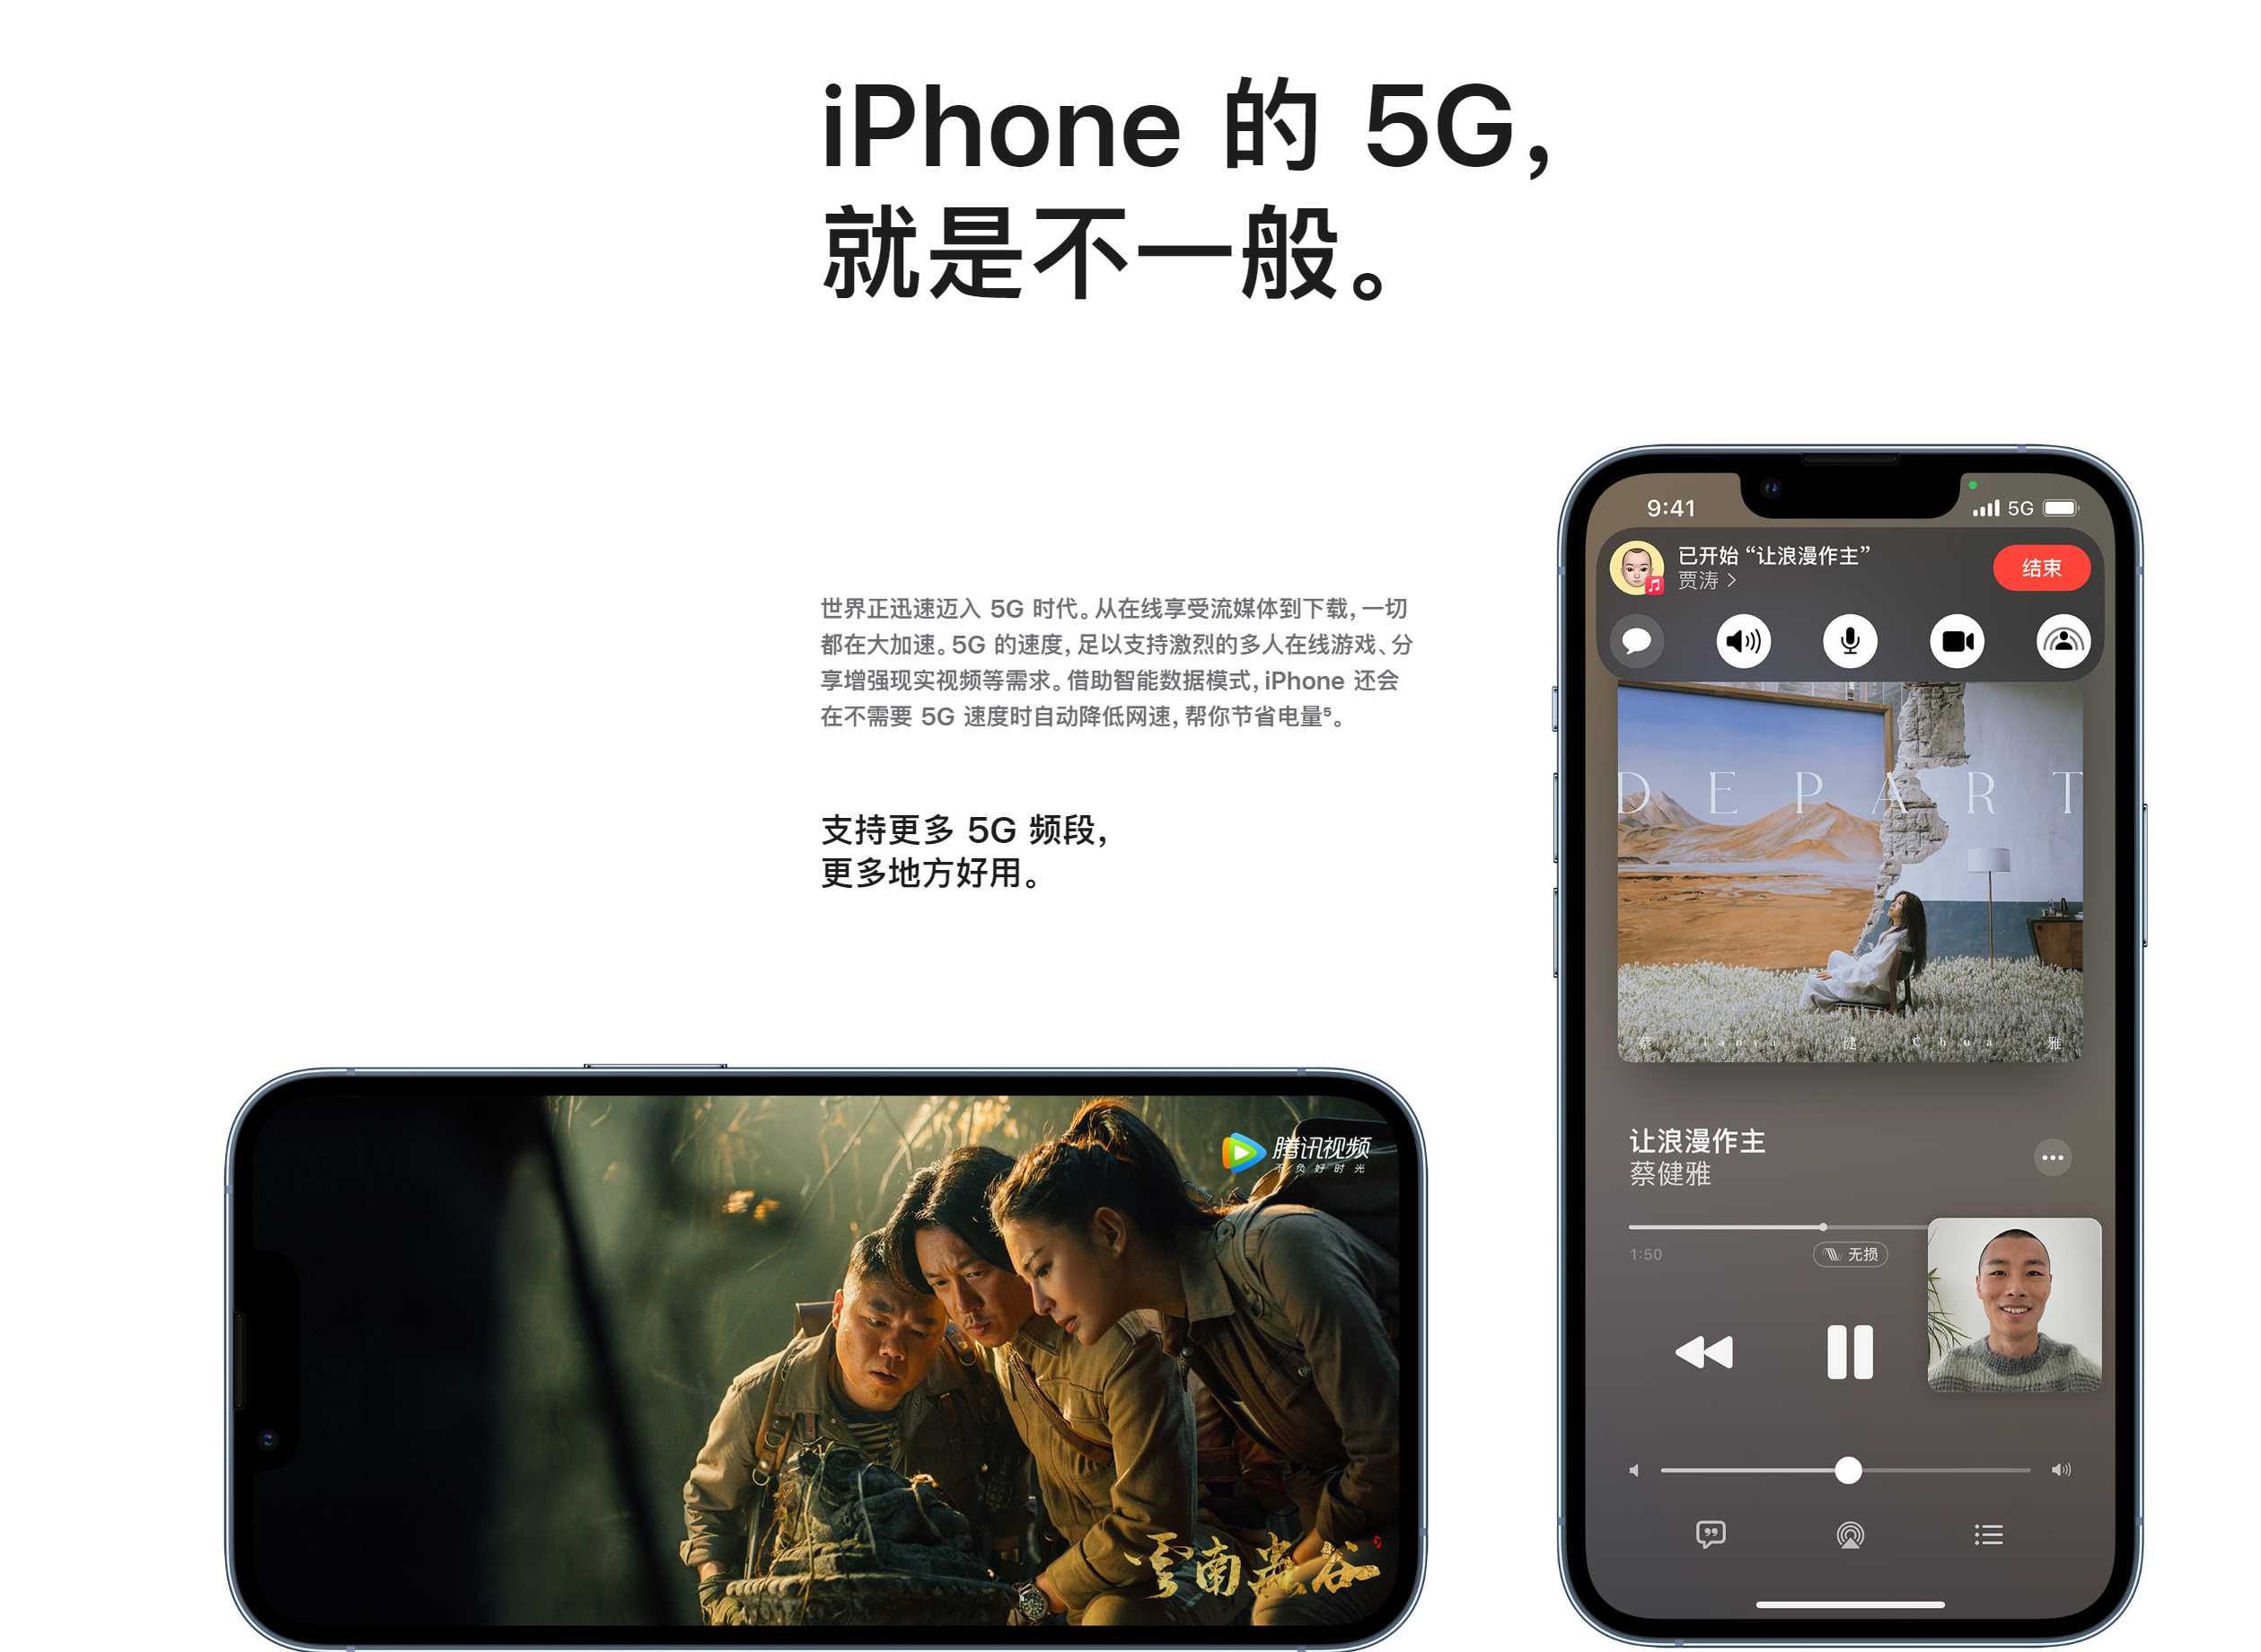 Apple中国的宣传图。为什么需要强调是“iPhone”的5G才是不一般的呢？